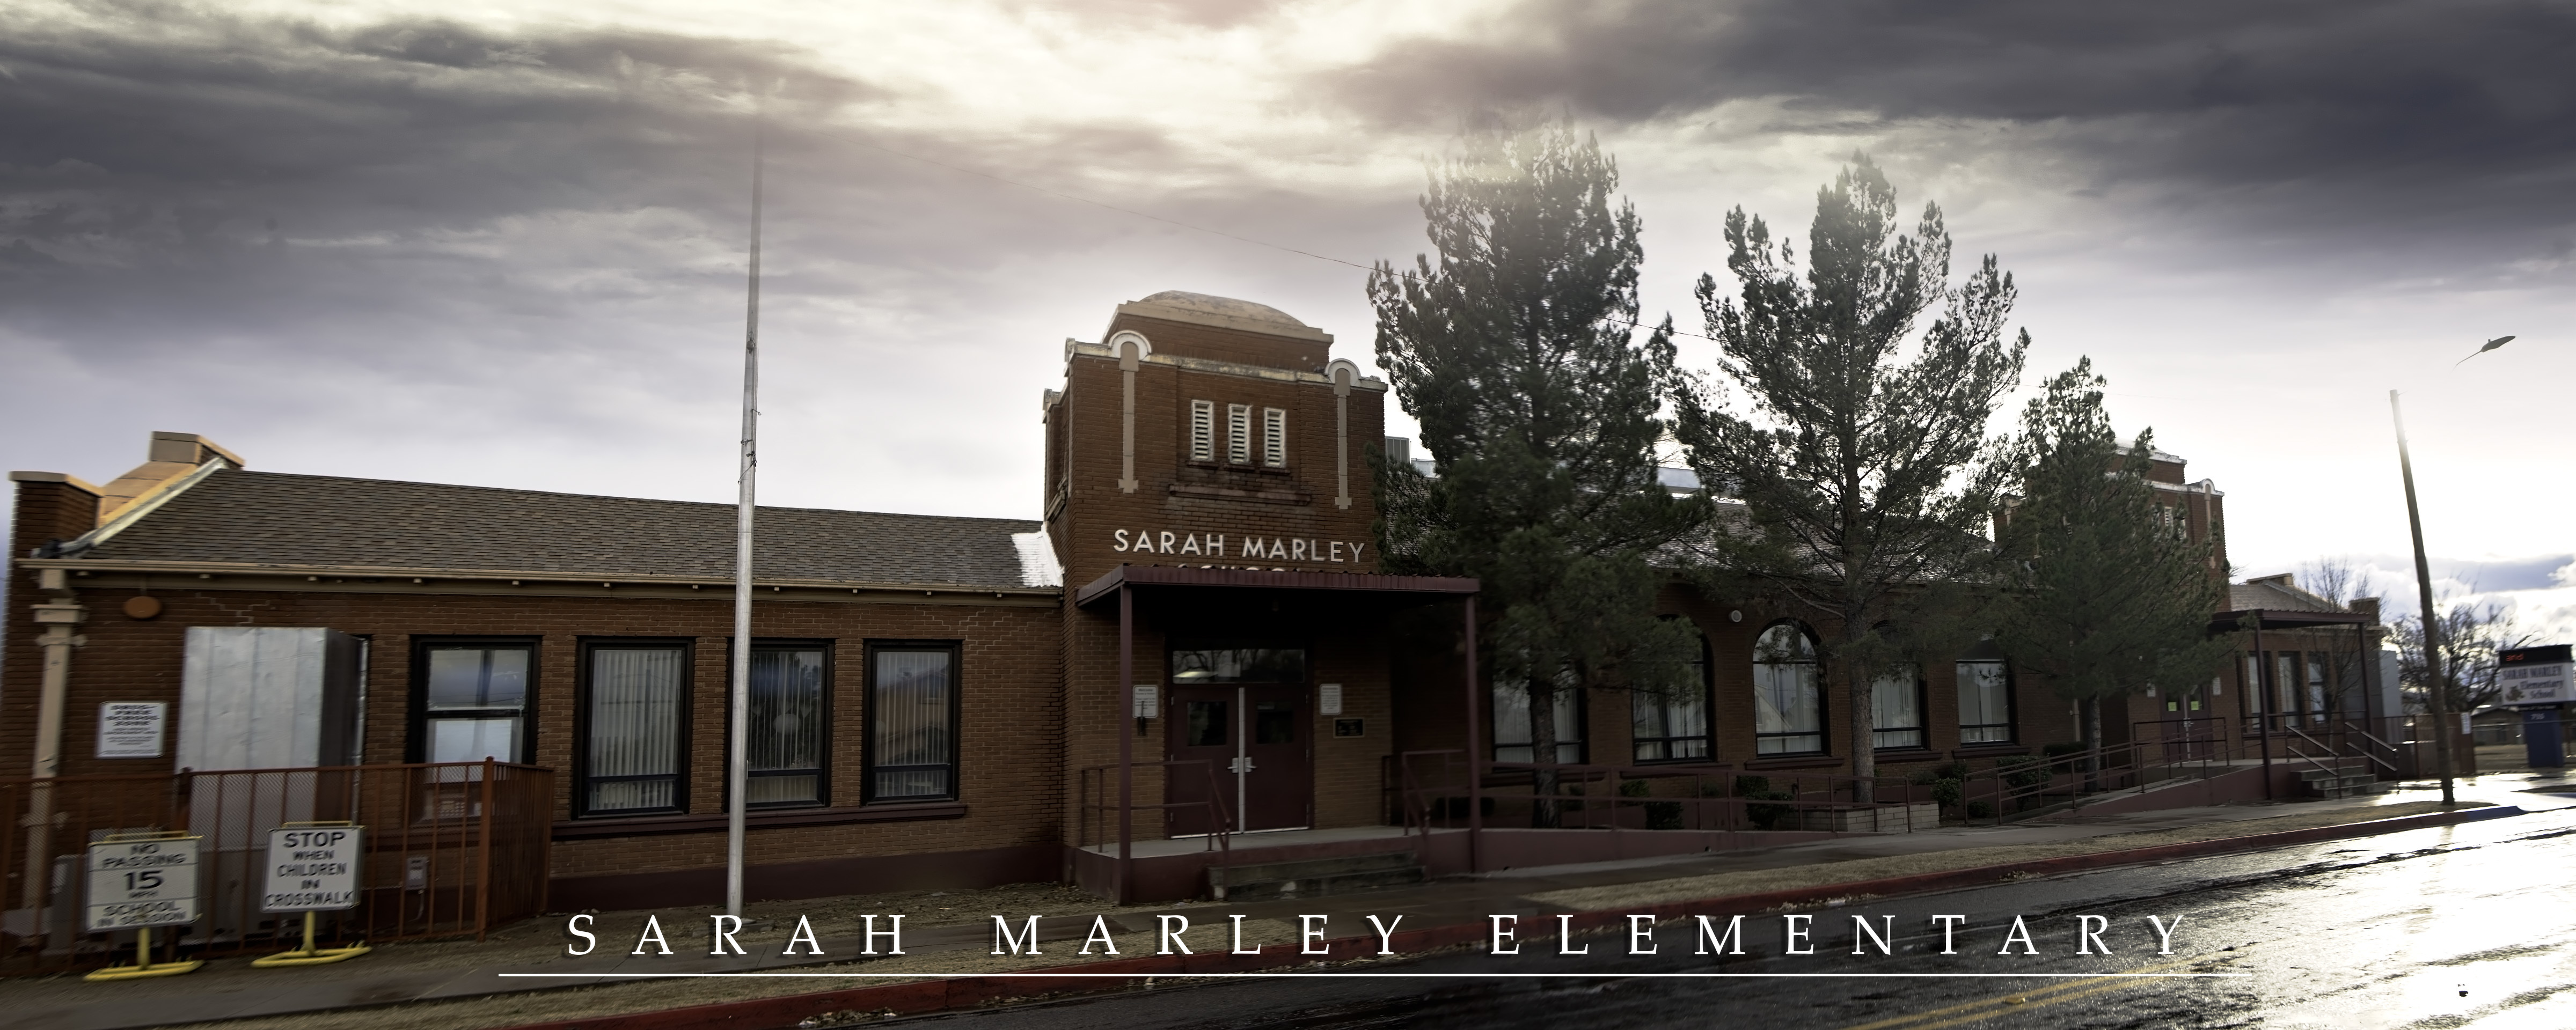 Sarah Marley Elementary School